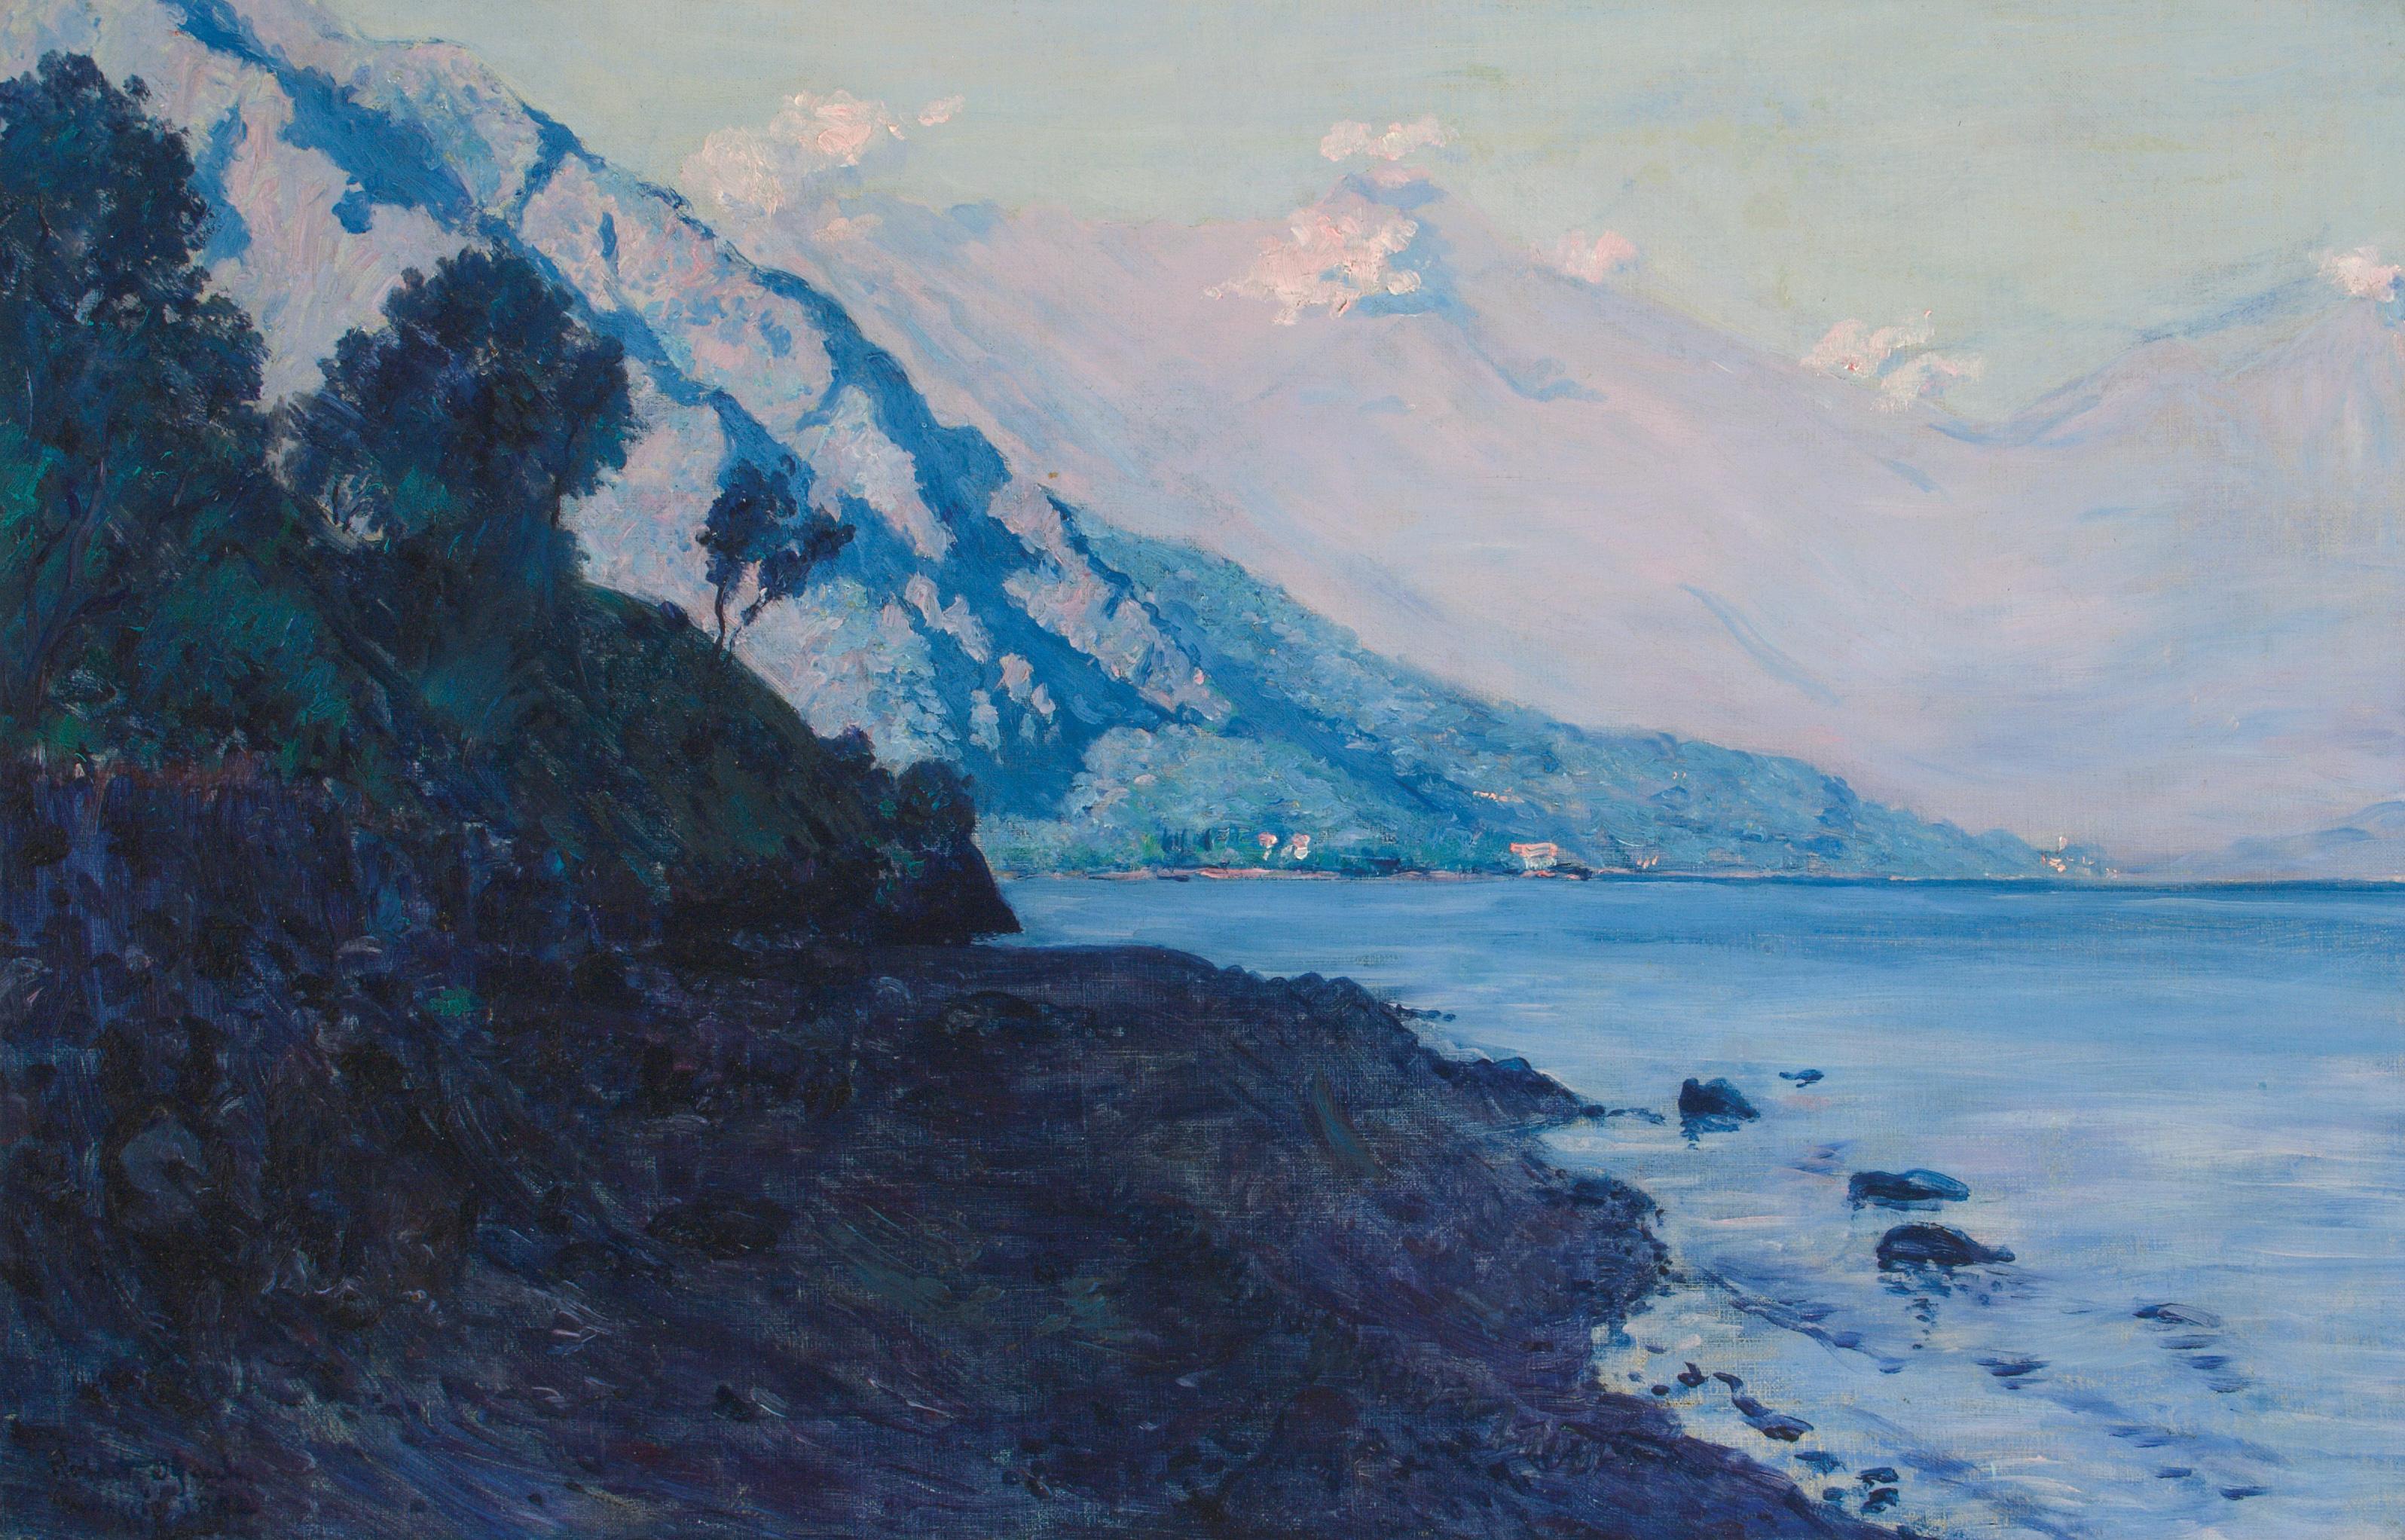 Lake Como Italy, Near Menaggio - oil painting by Irish American Artist Gauley - Painting by Robert Gauley